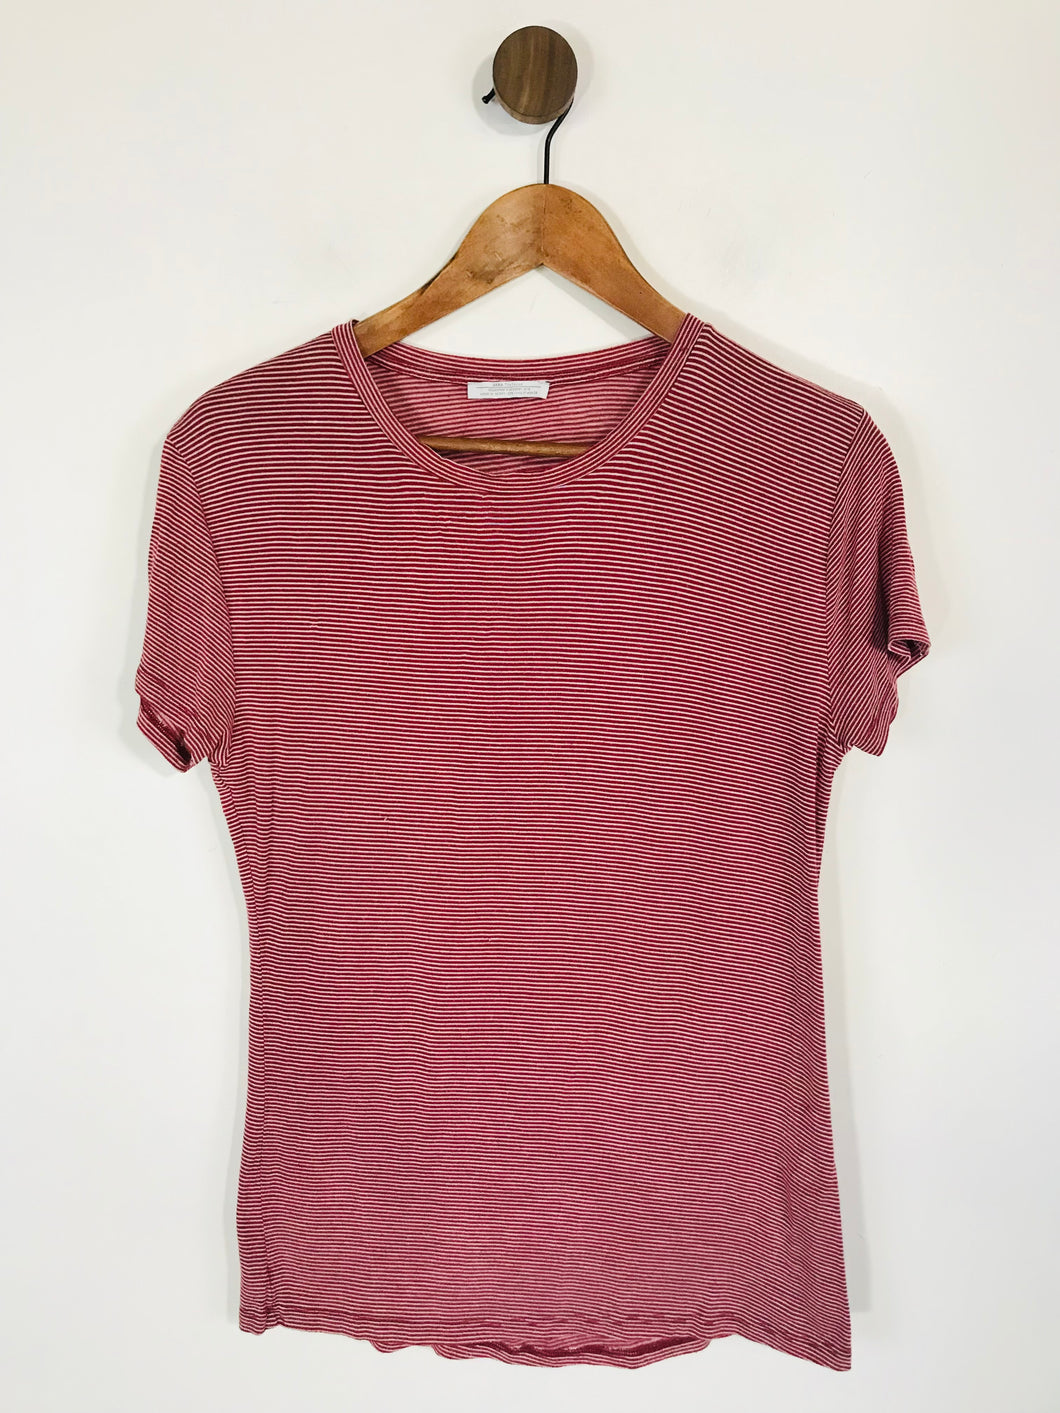 Zara Women's Striped T-Shirt | S UK8 | Red